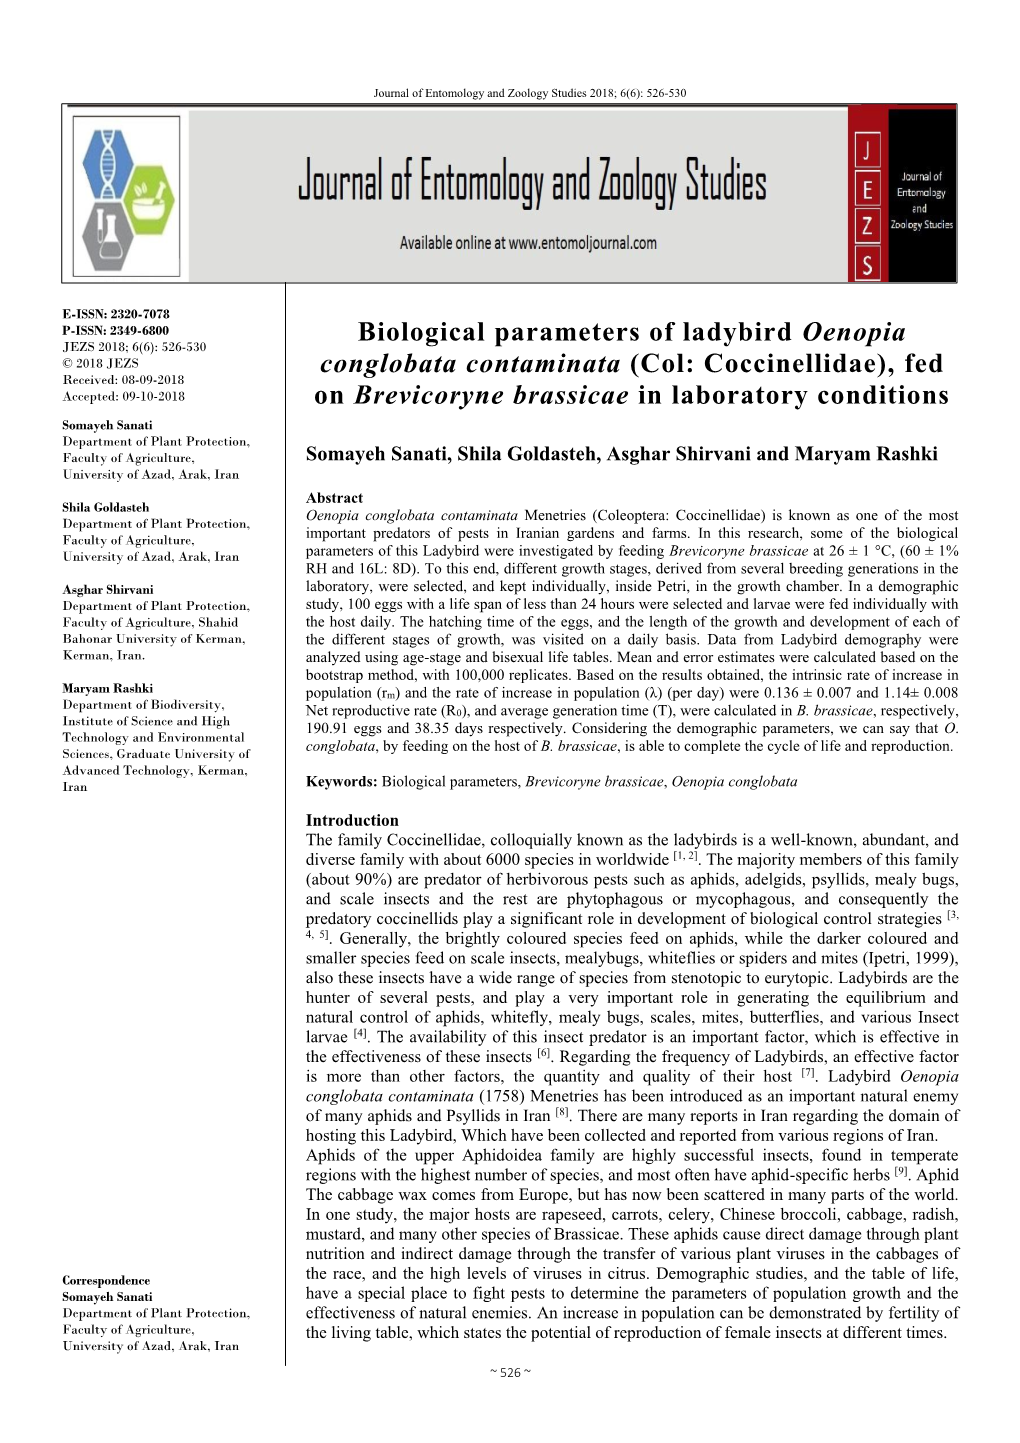 Biological Parameters of Ladybird Oenopia Conglobata Contaminata